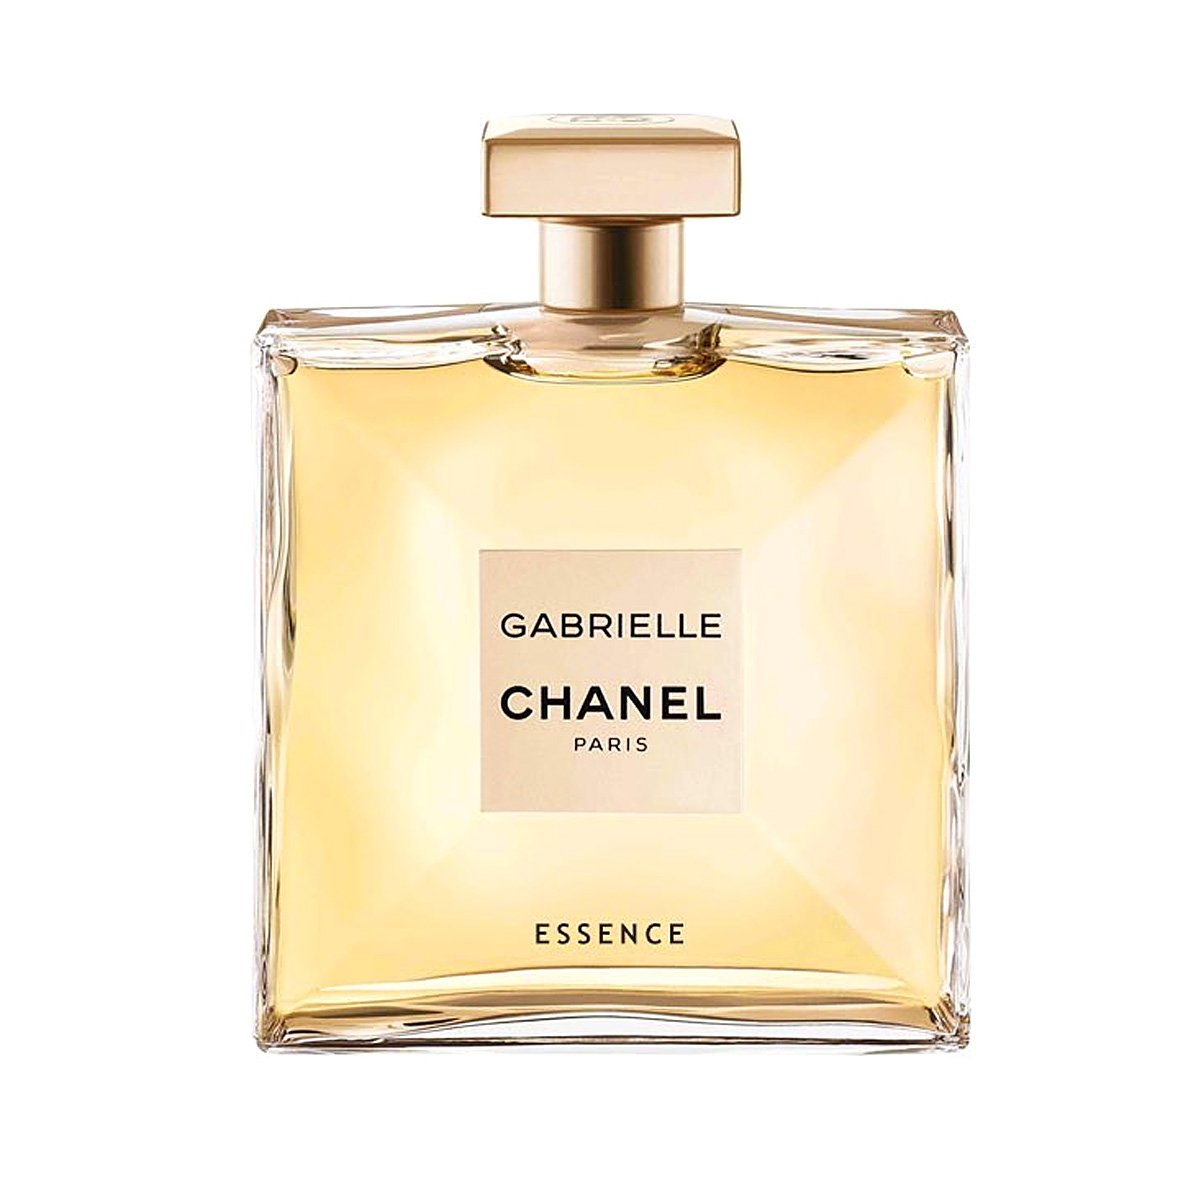 Gabrielle Essence Chanel аромат  аромат для женщин 2019